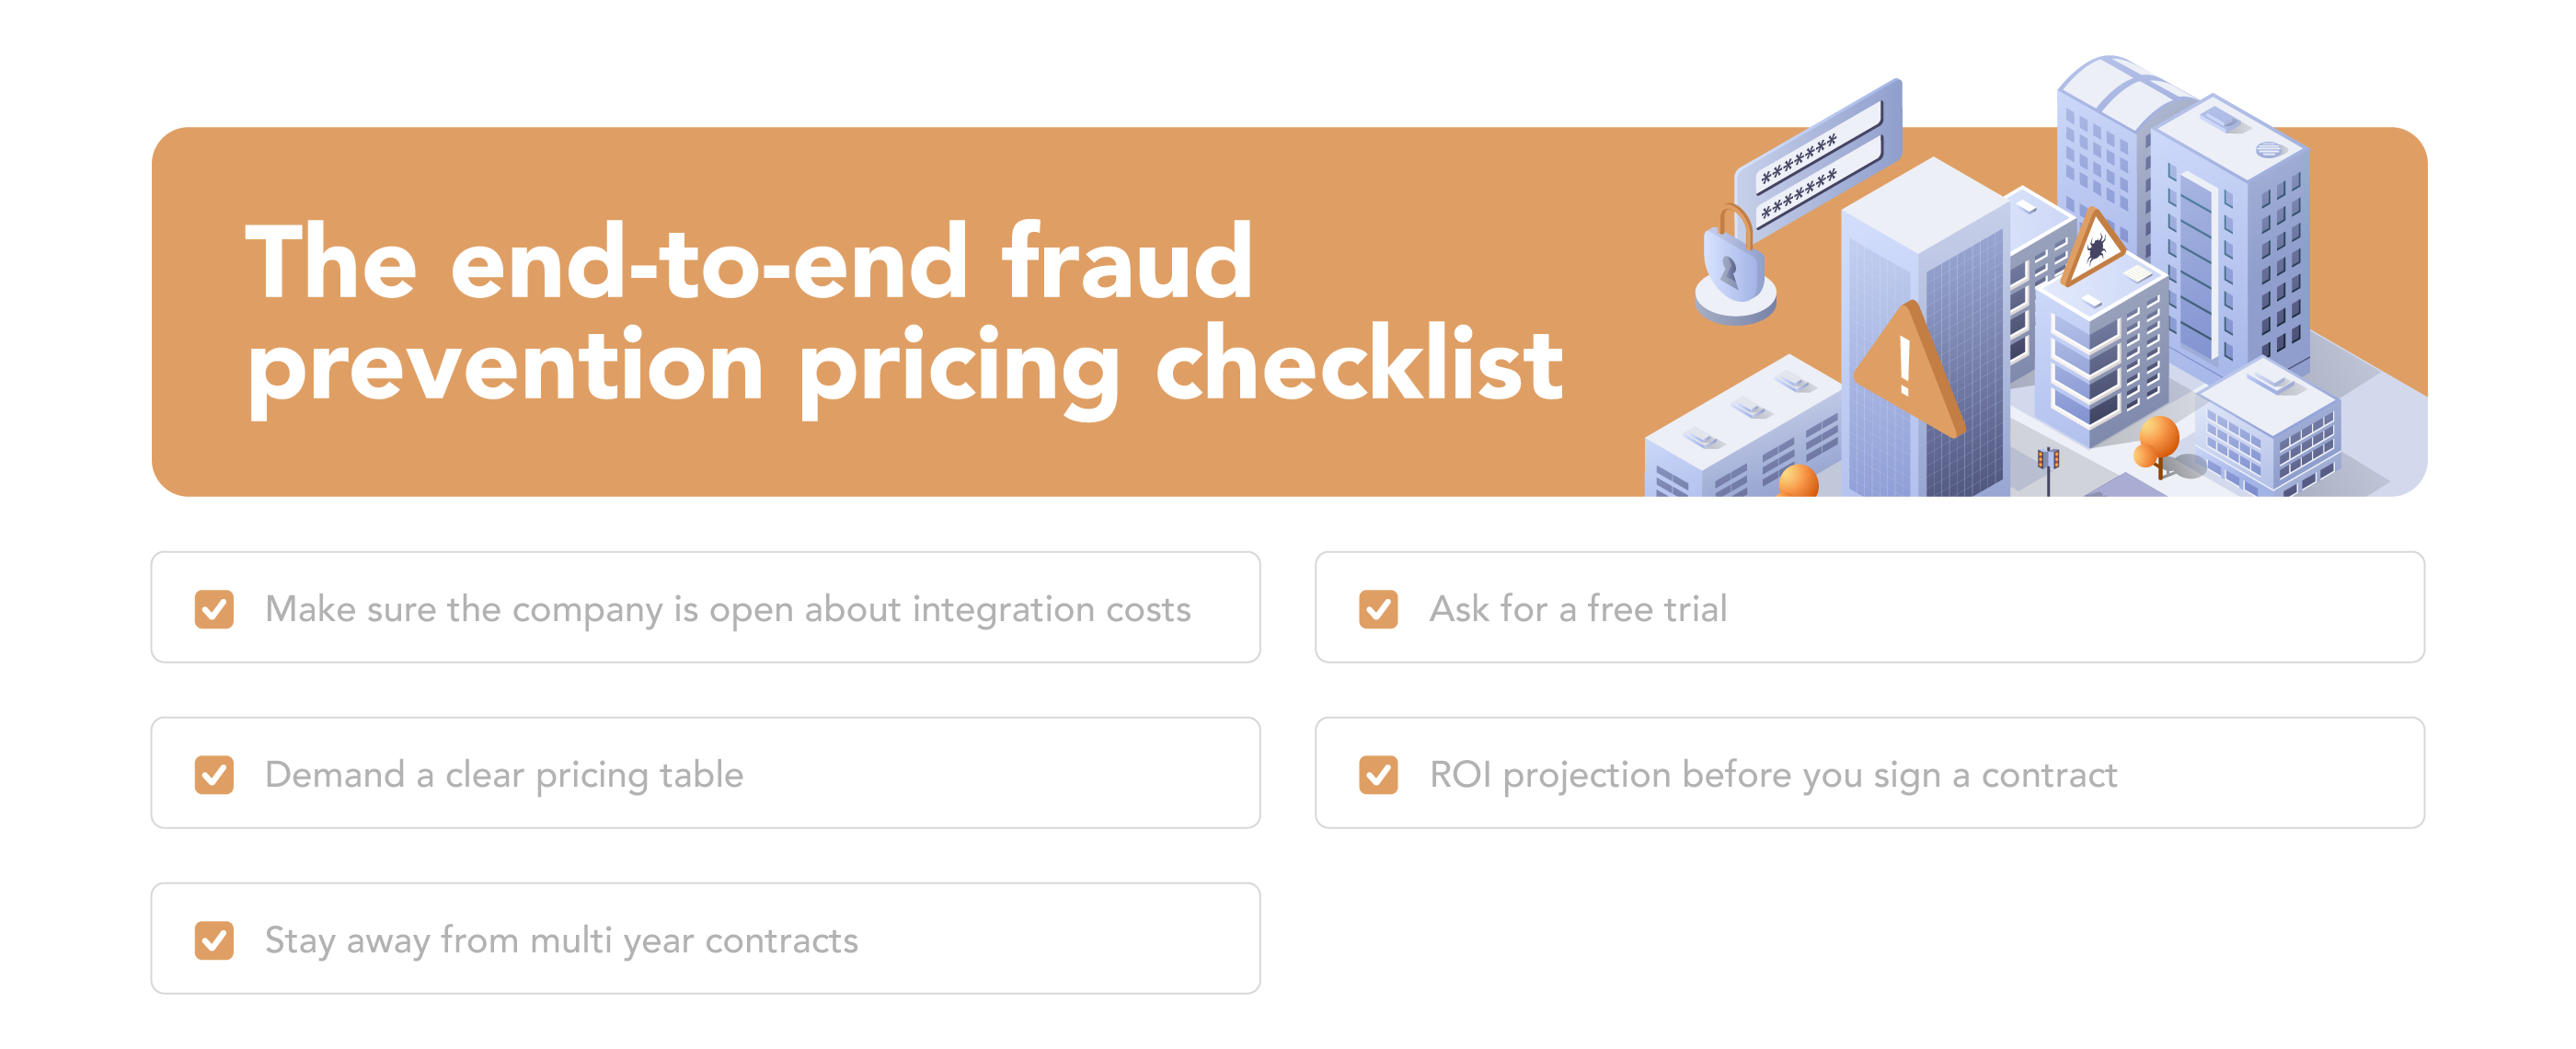 checklist for ensuring transparent enterprise fraud solutions pricing